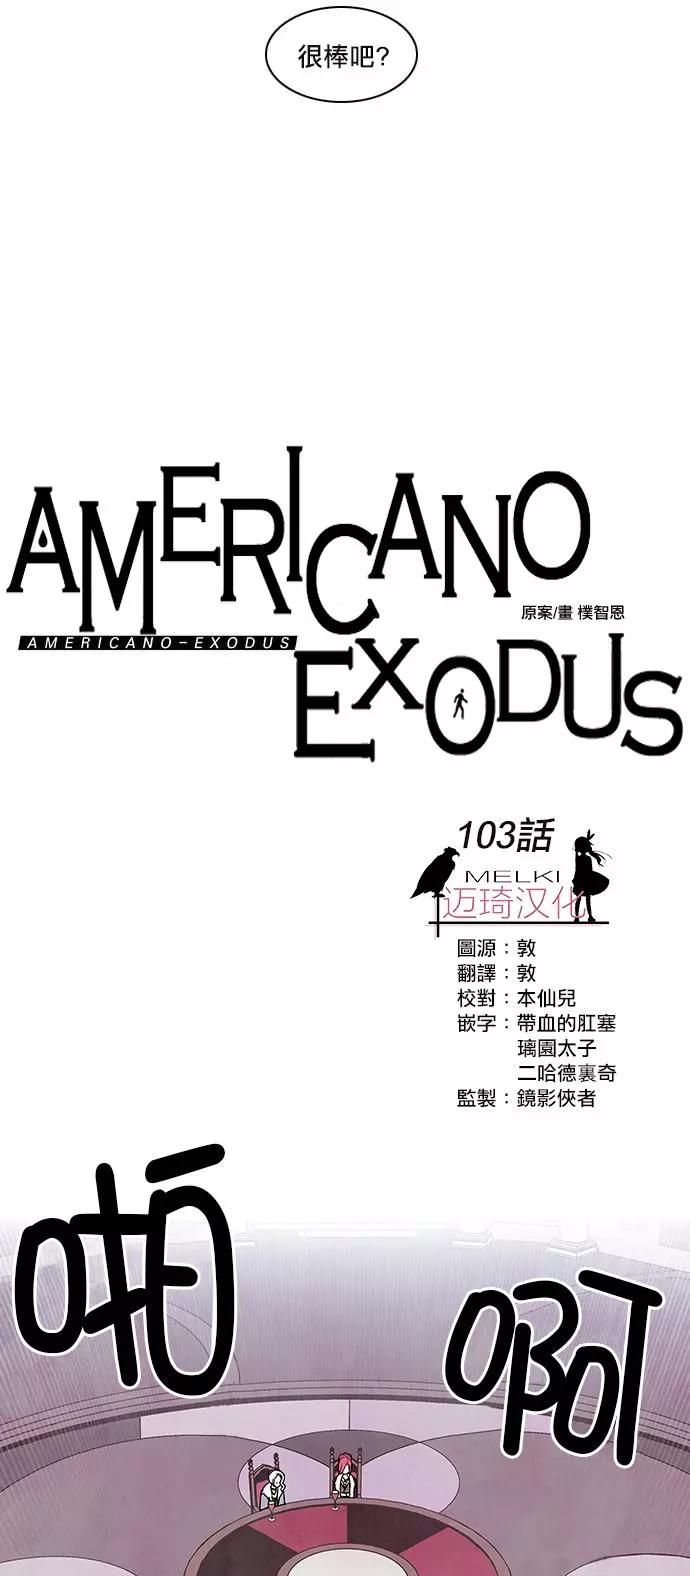 Americano-exodus - 第103回 - 3